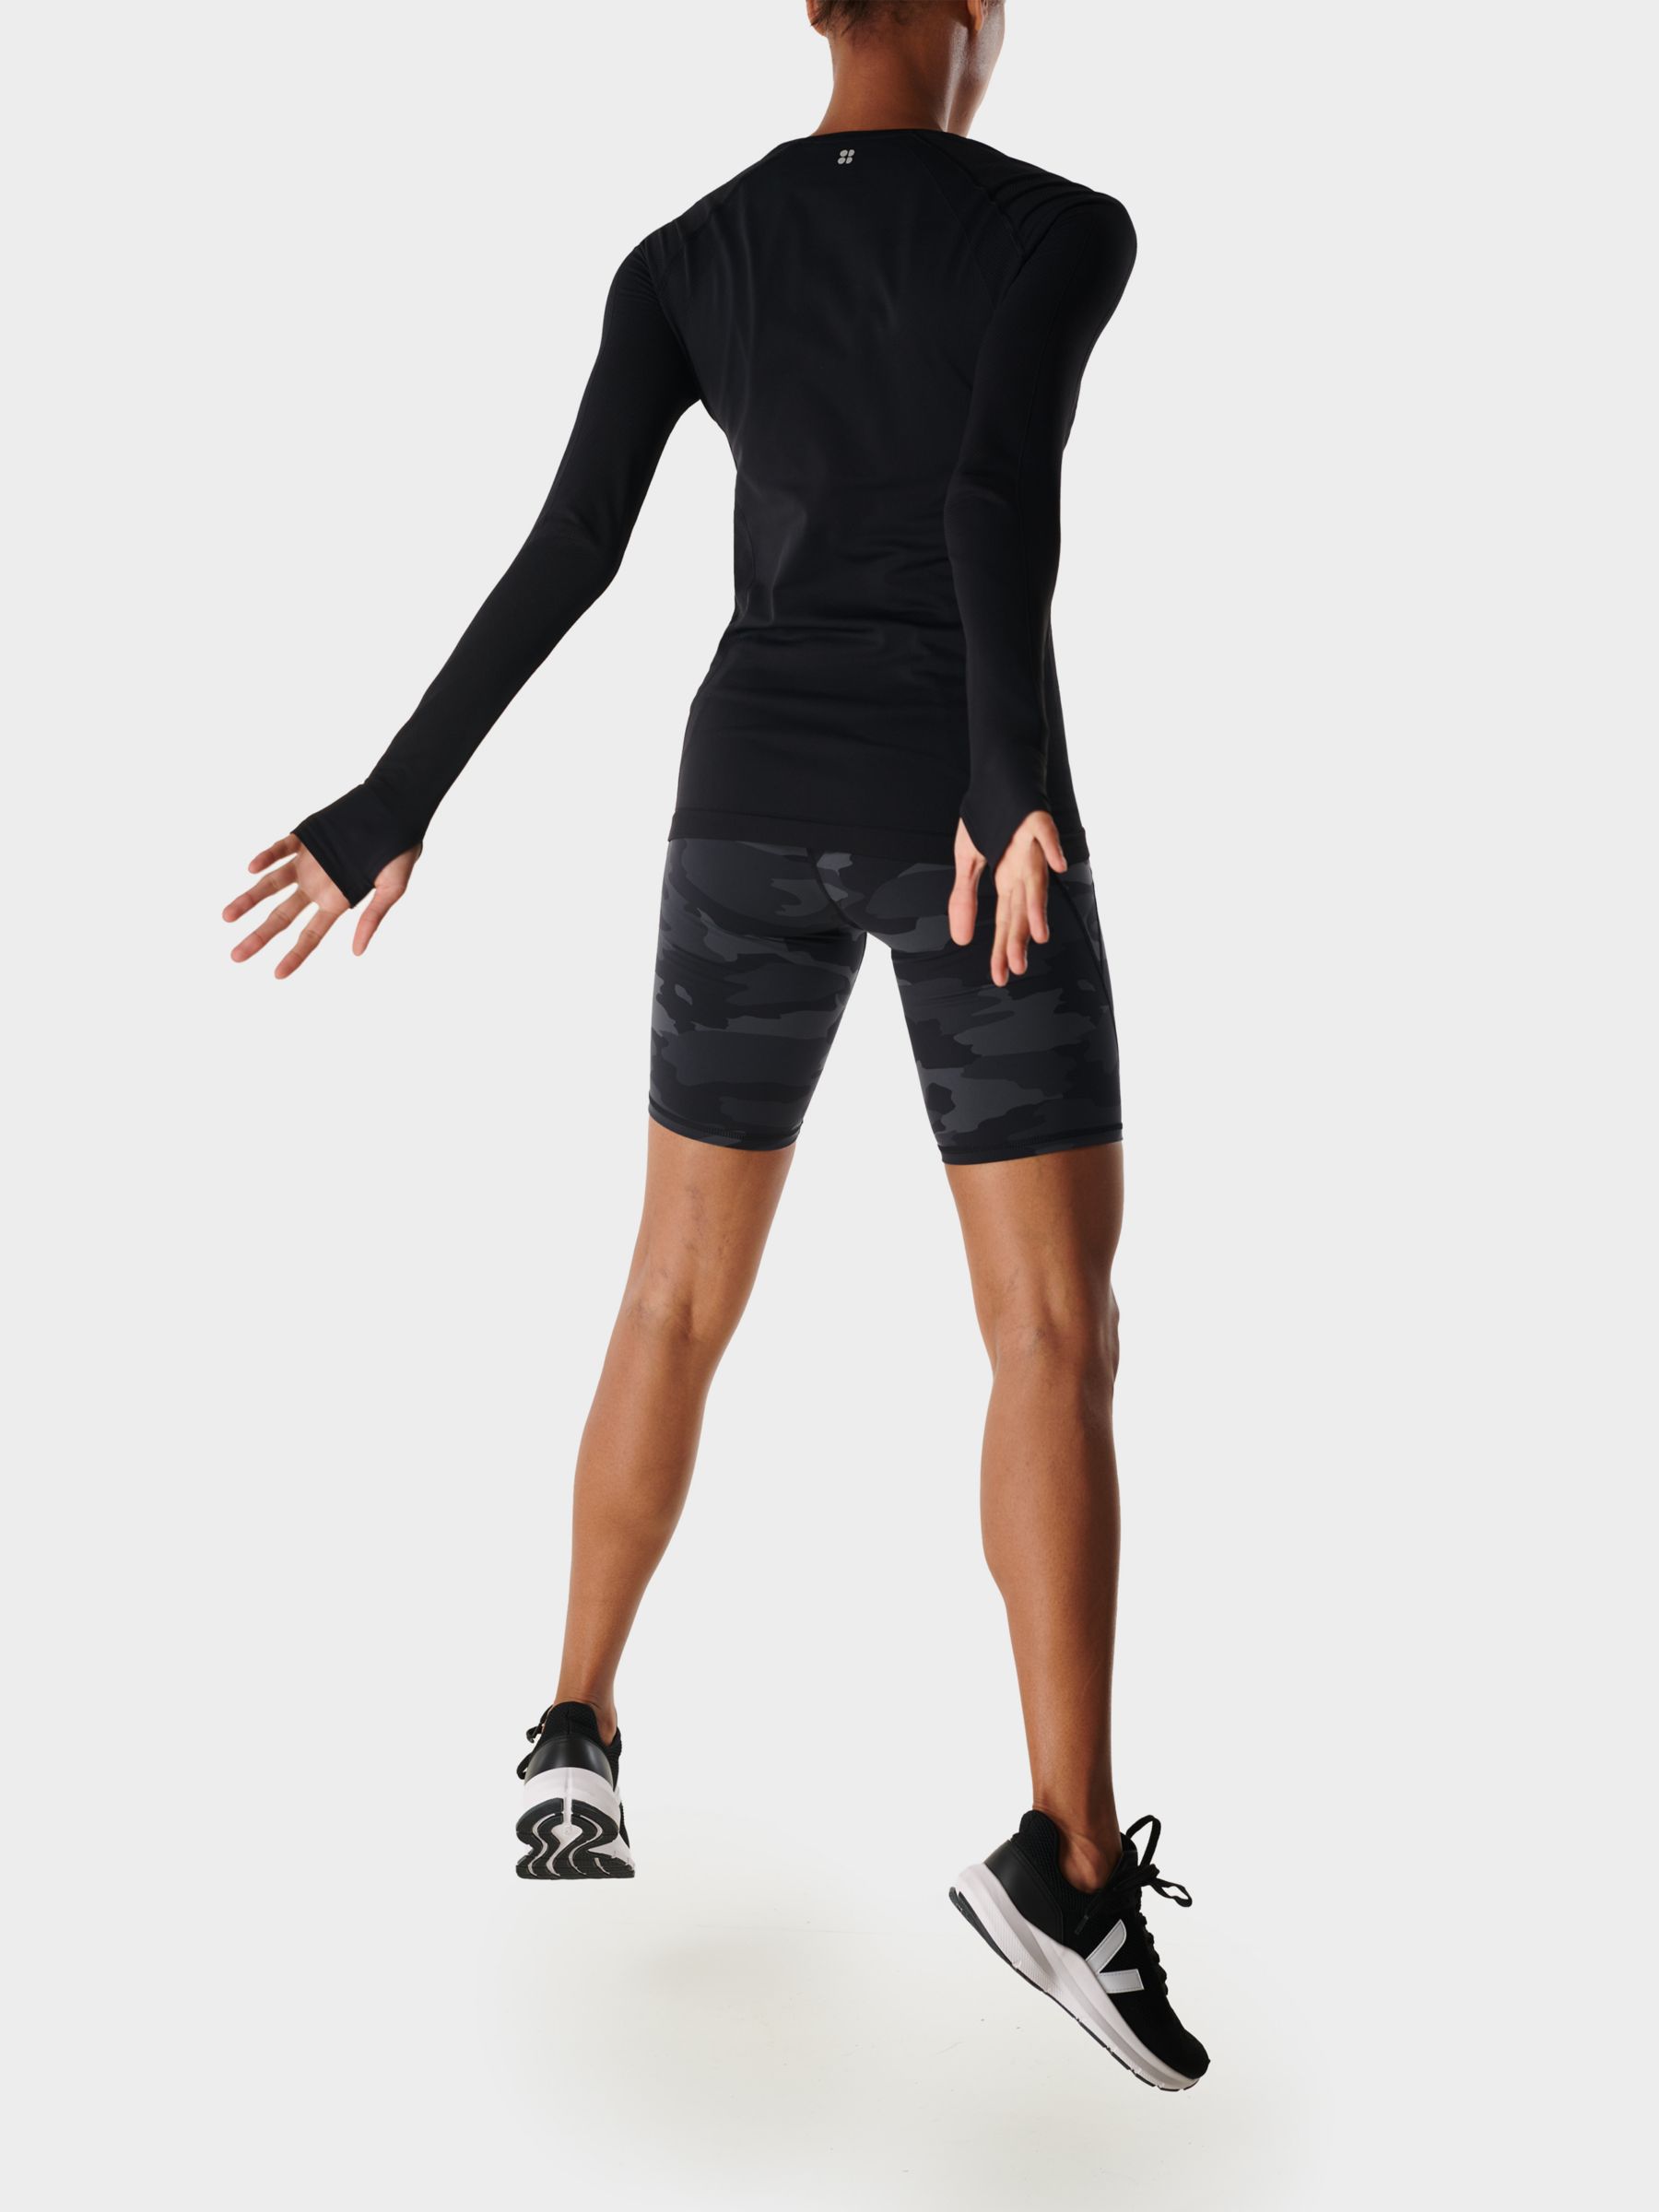 Sweaty Betty Athlete Seamless Long Sleeve Gym Top, Black, XS